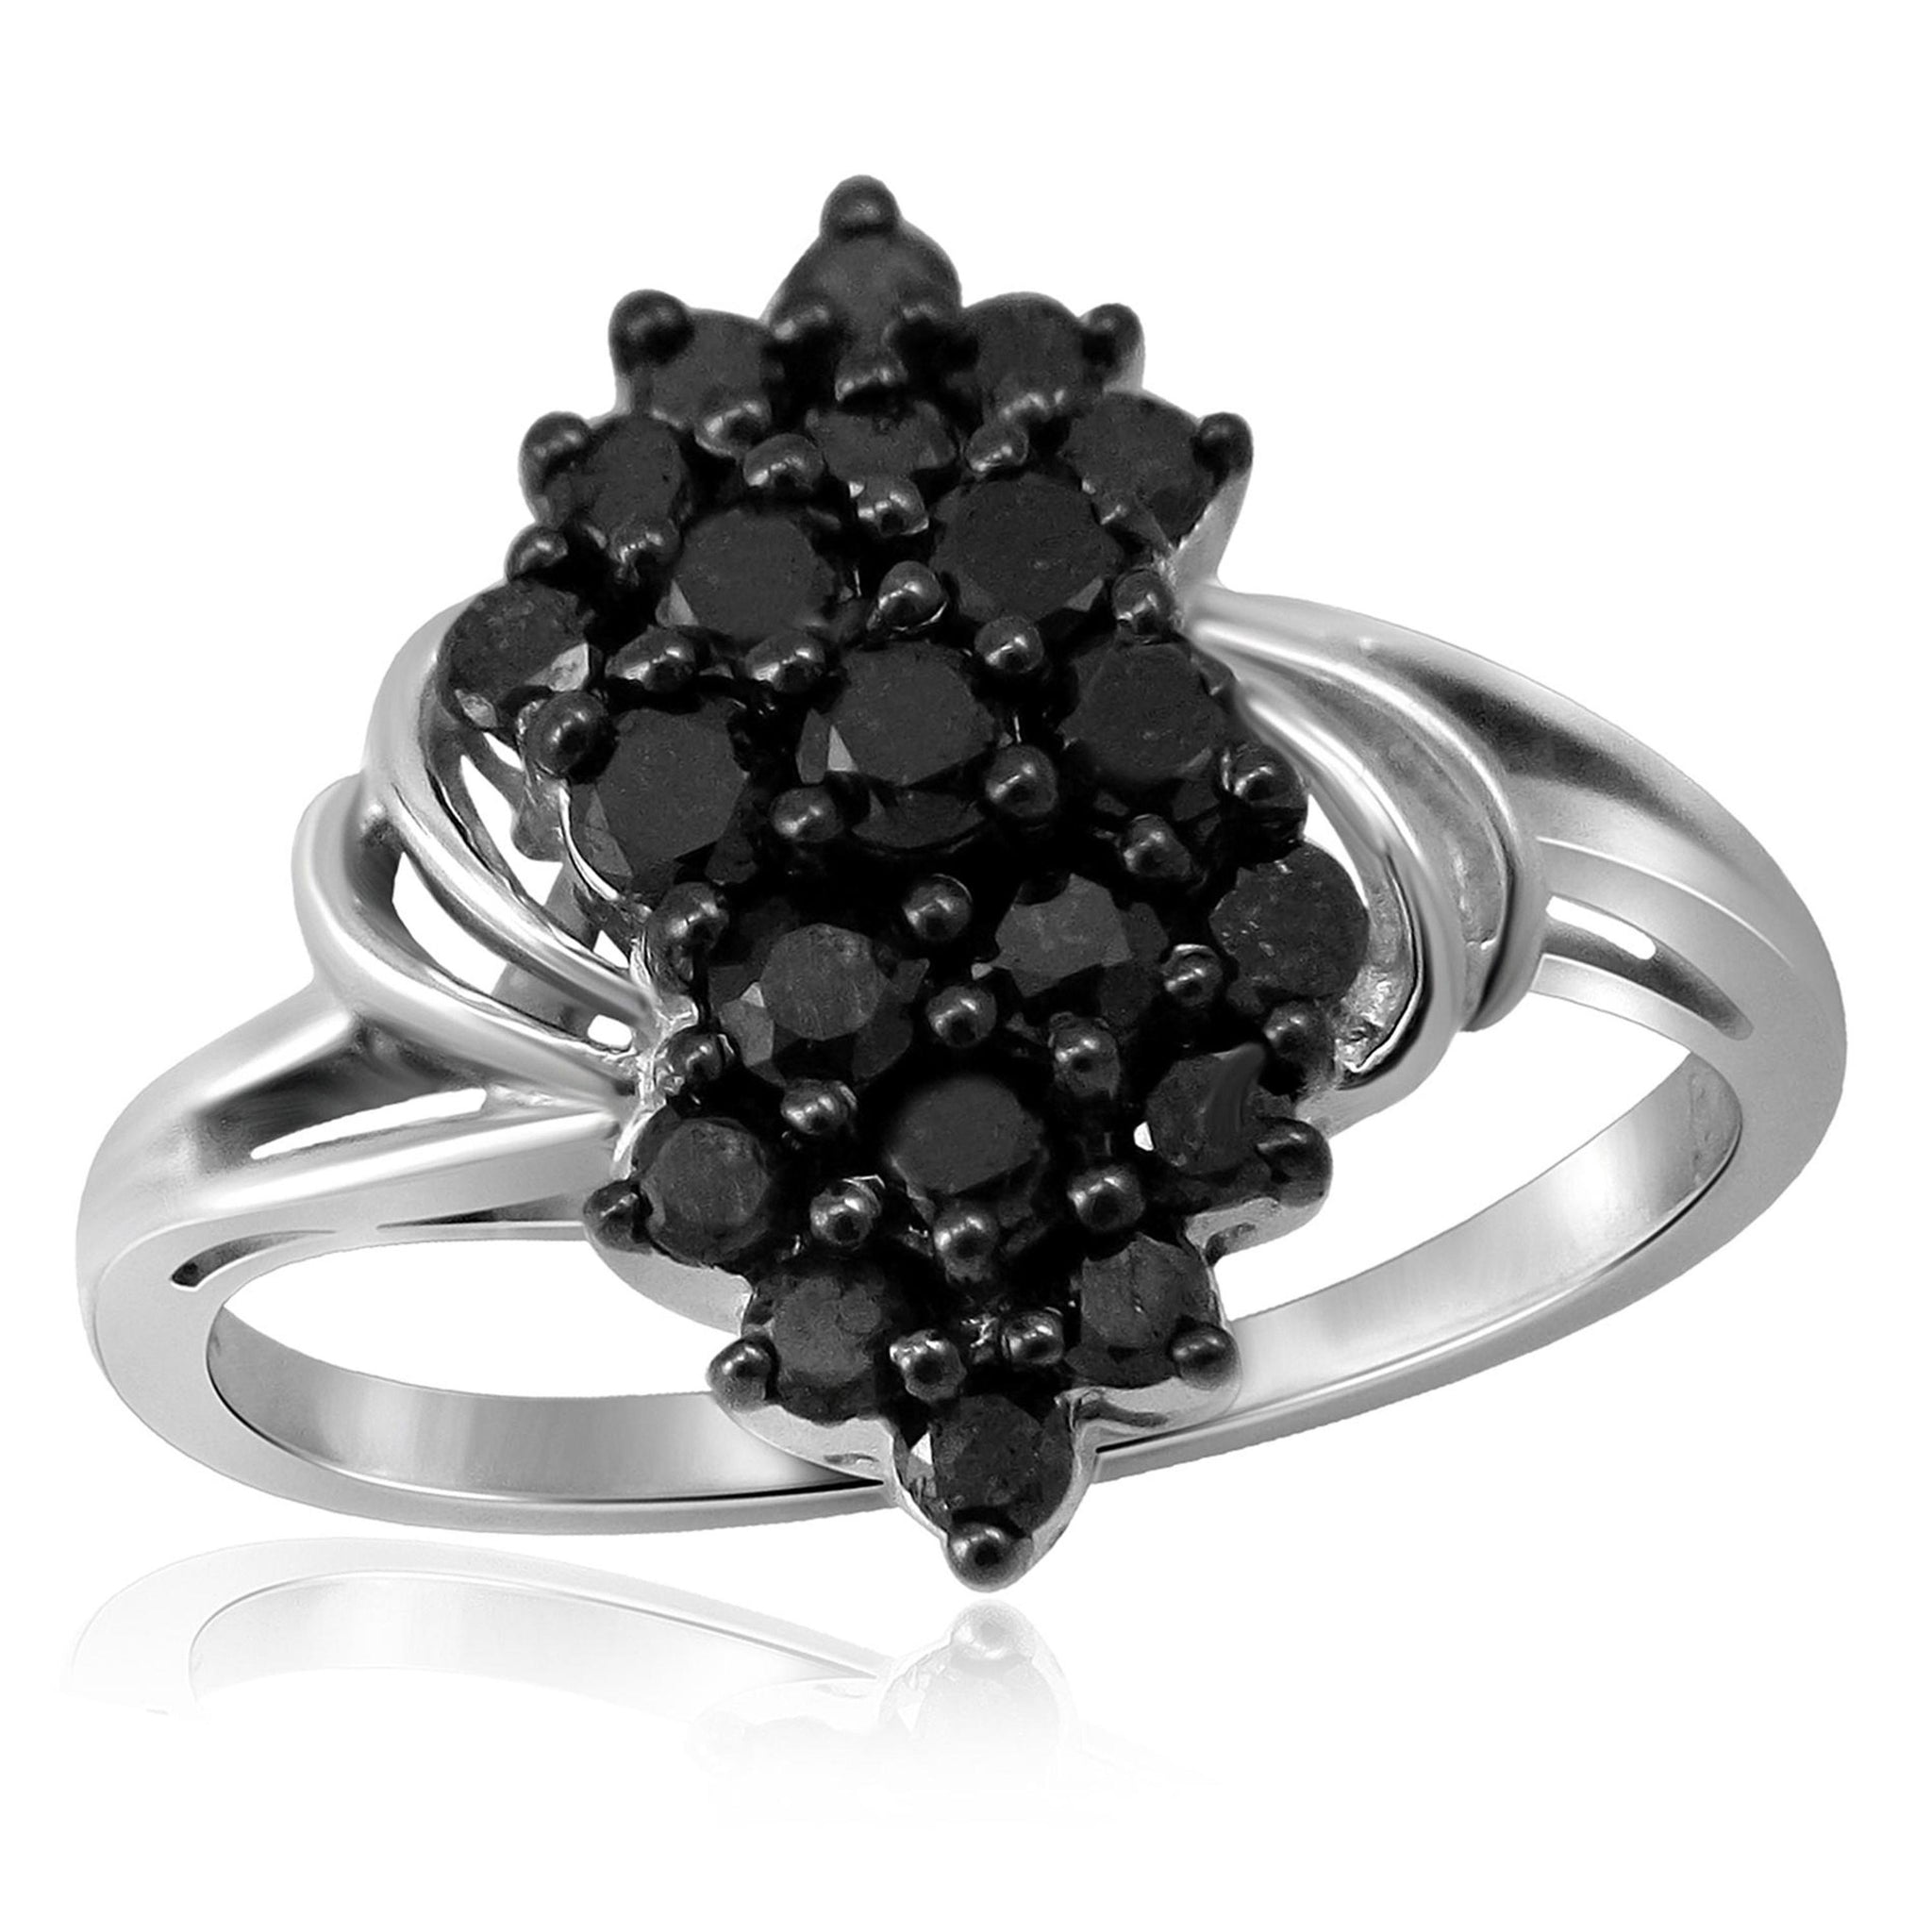 JewelonFire 1 CTW Black Diamond Sterling Silver Ring